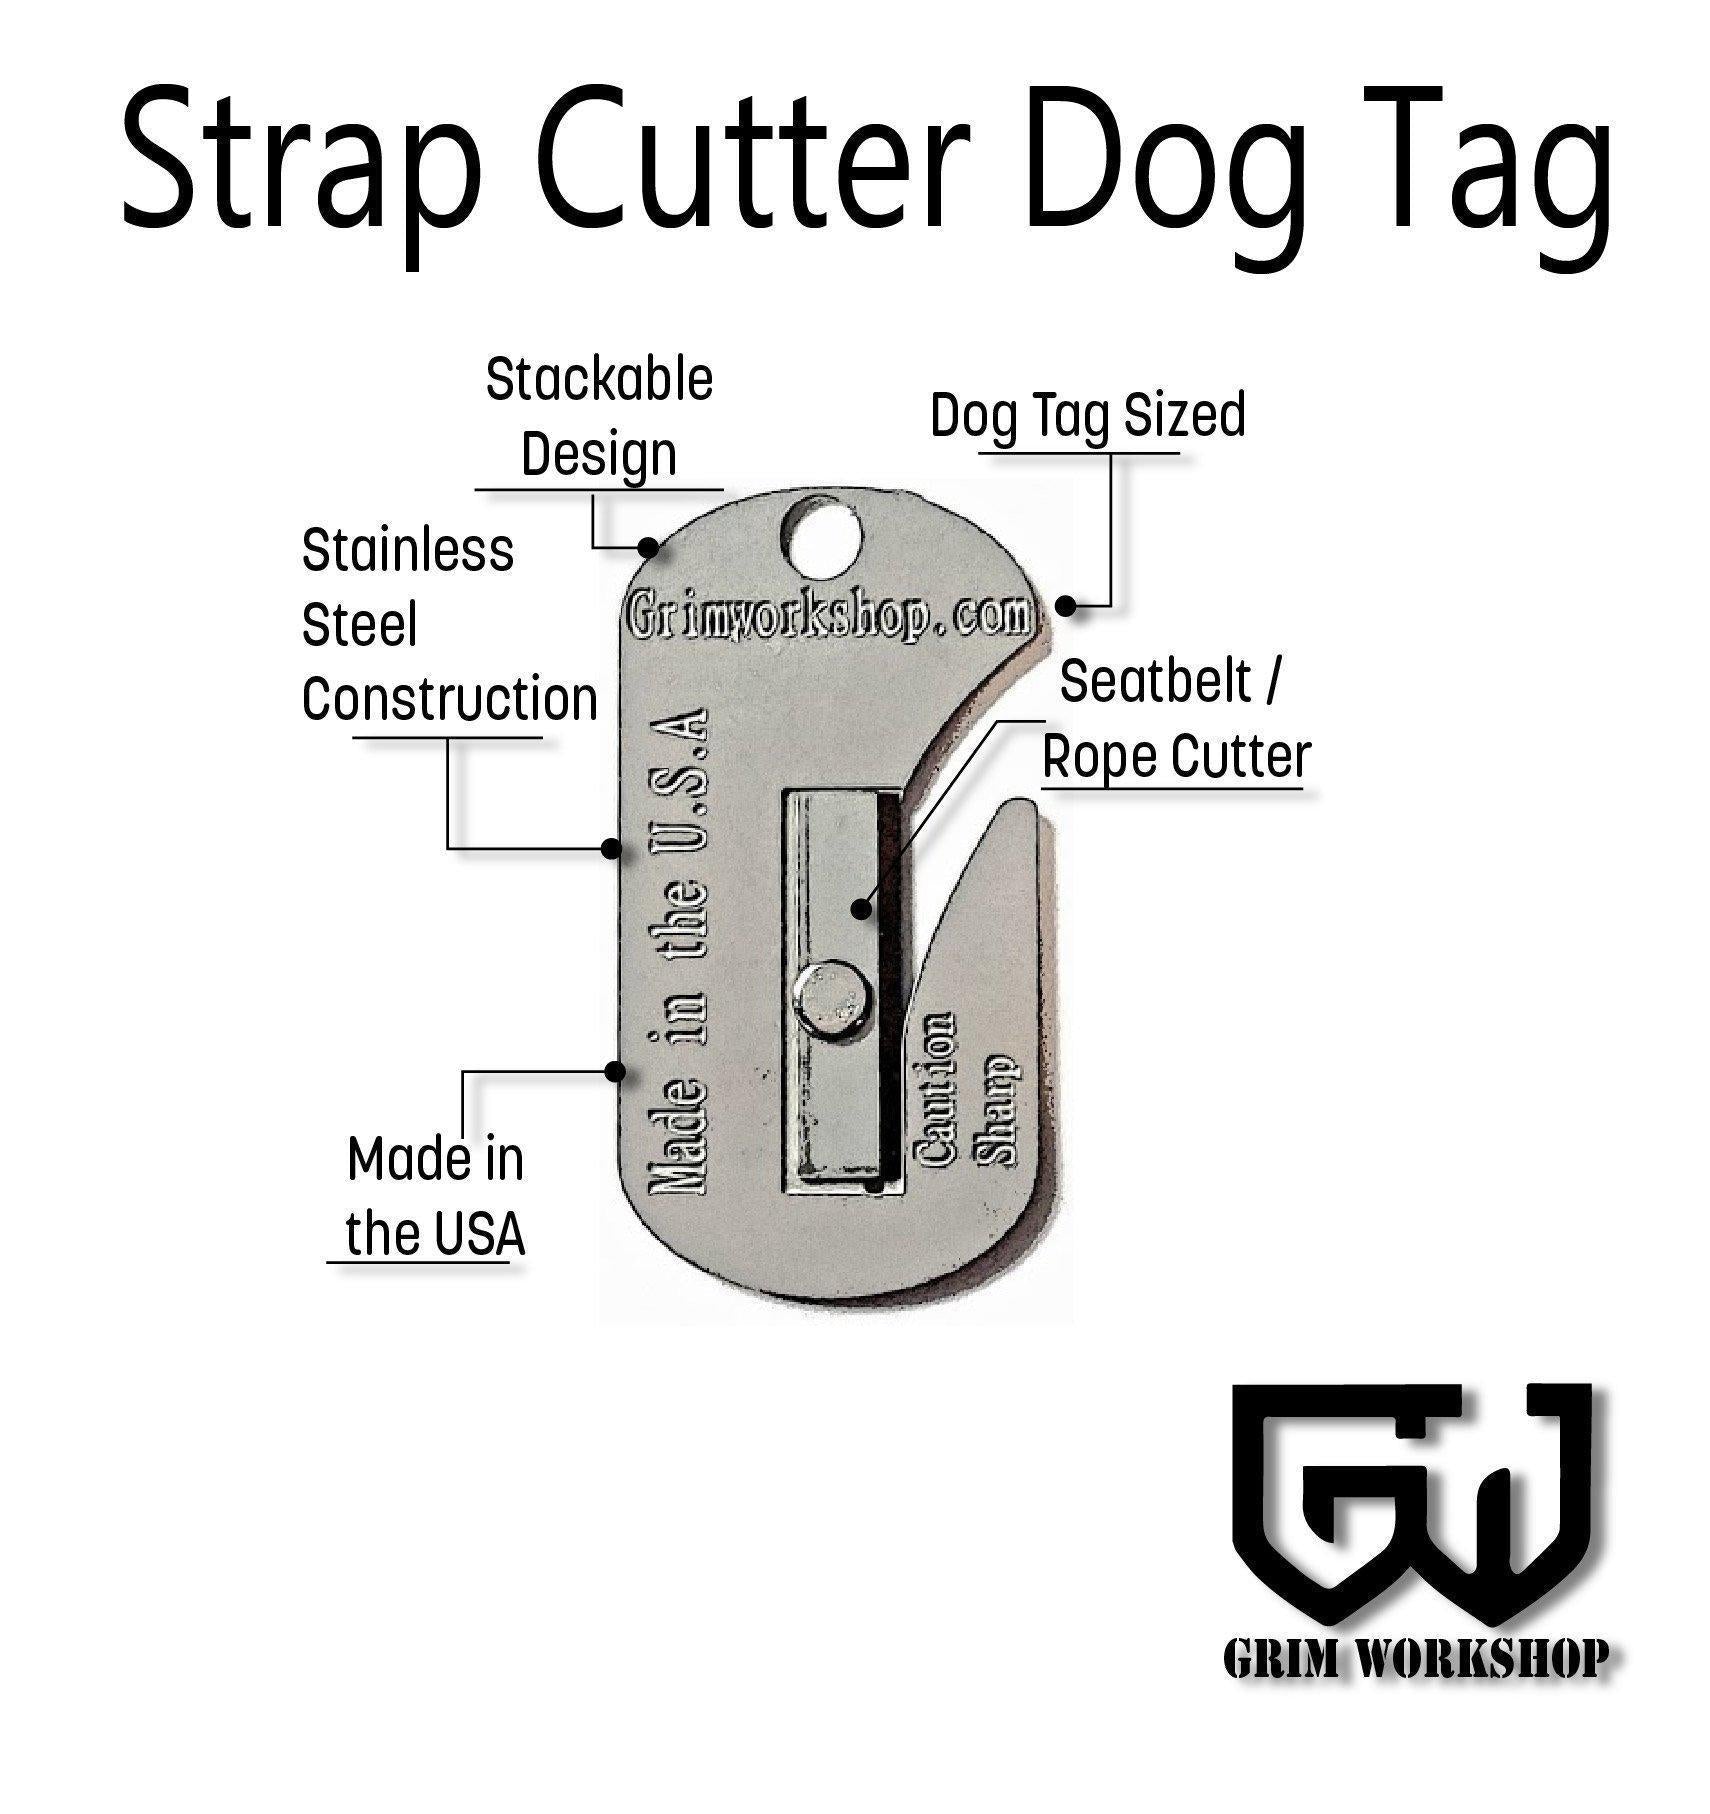 Strap Cutter Dog Tag